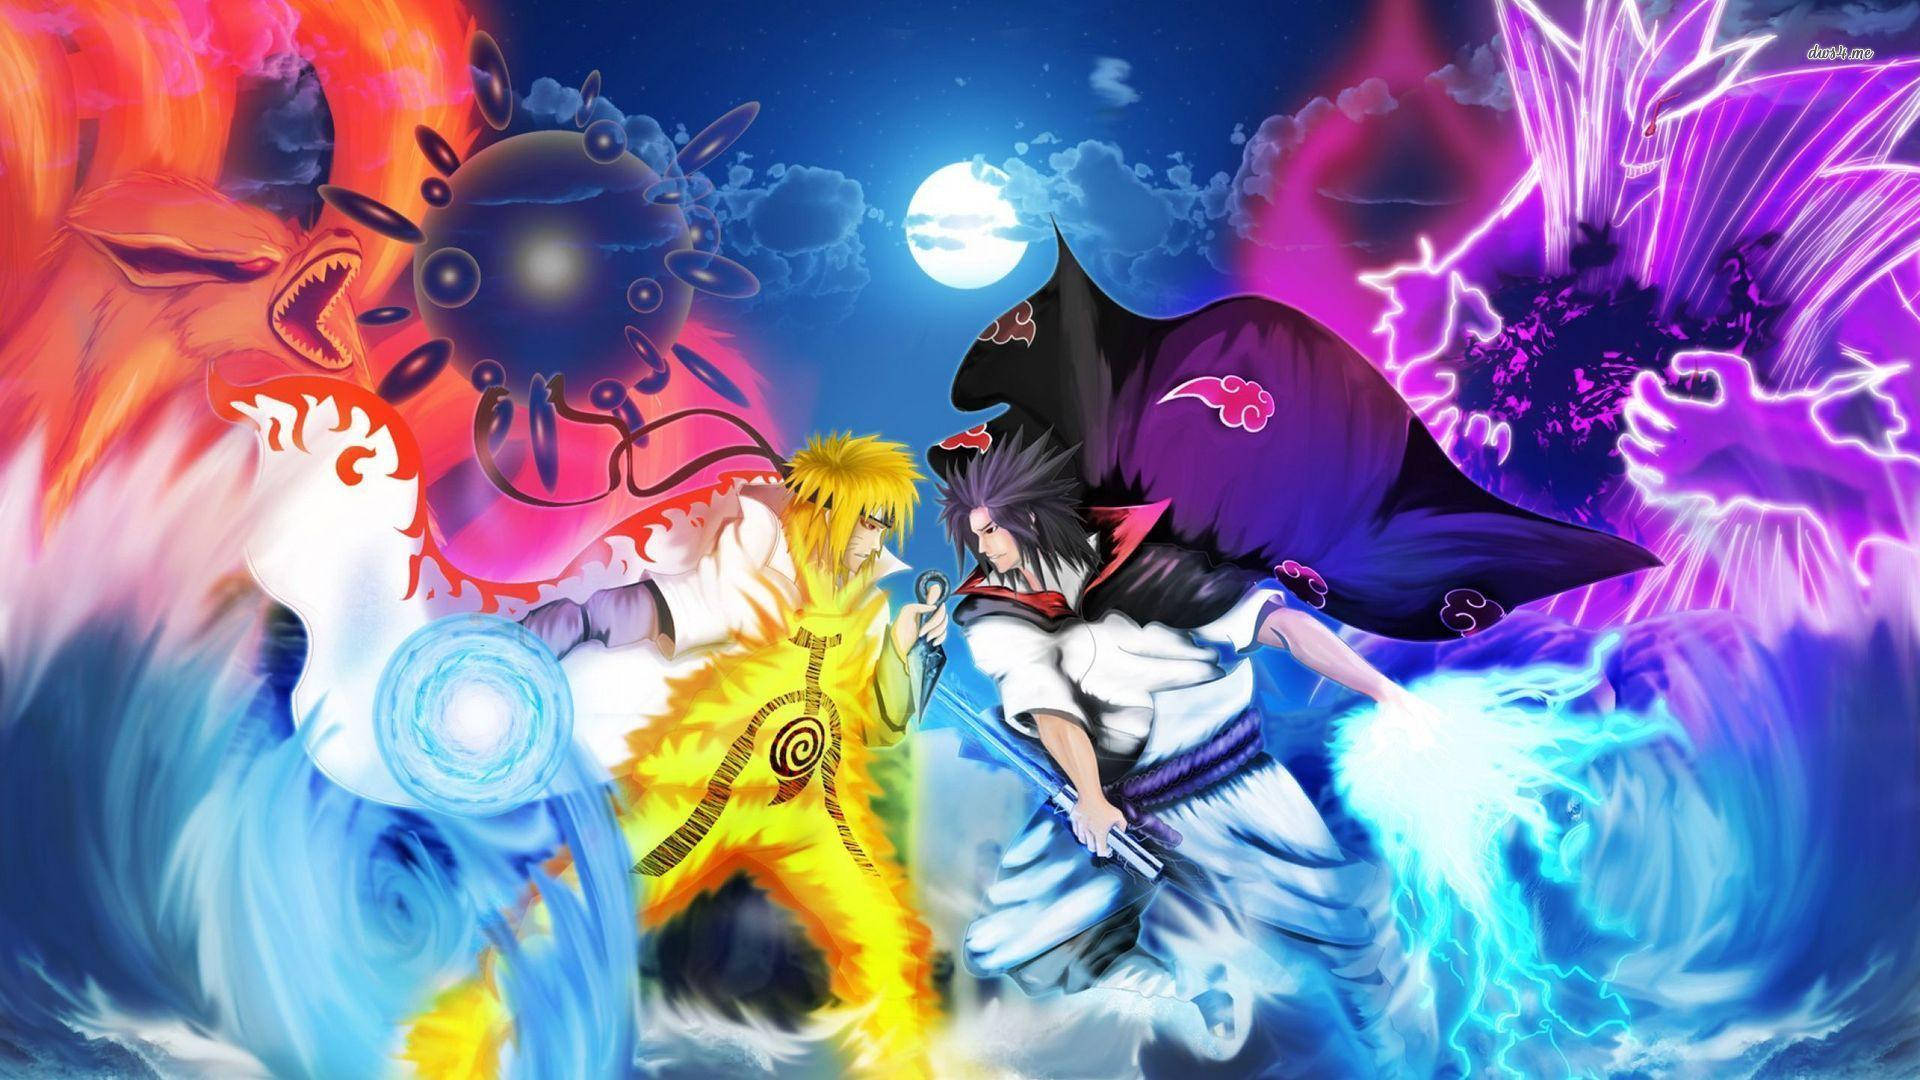 Naruto and Sasuke Poster Wallpaper